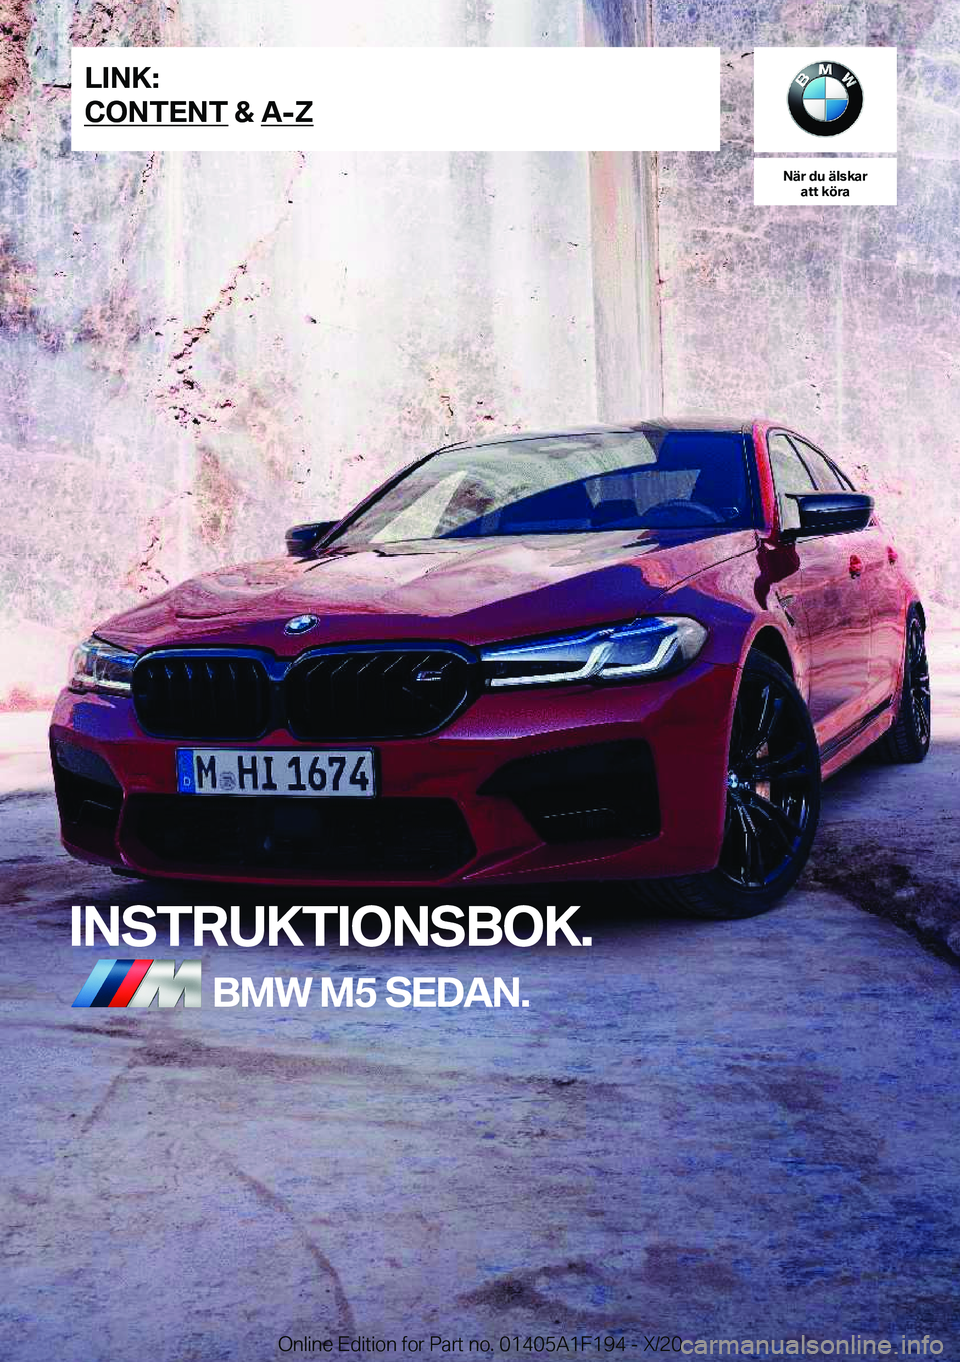 BMW M5 2021  InstruktionsbÖcker (in Swedish) �N�ä�r��d�u��ä�l�s�k�a�r�a�t�t��k�